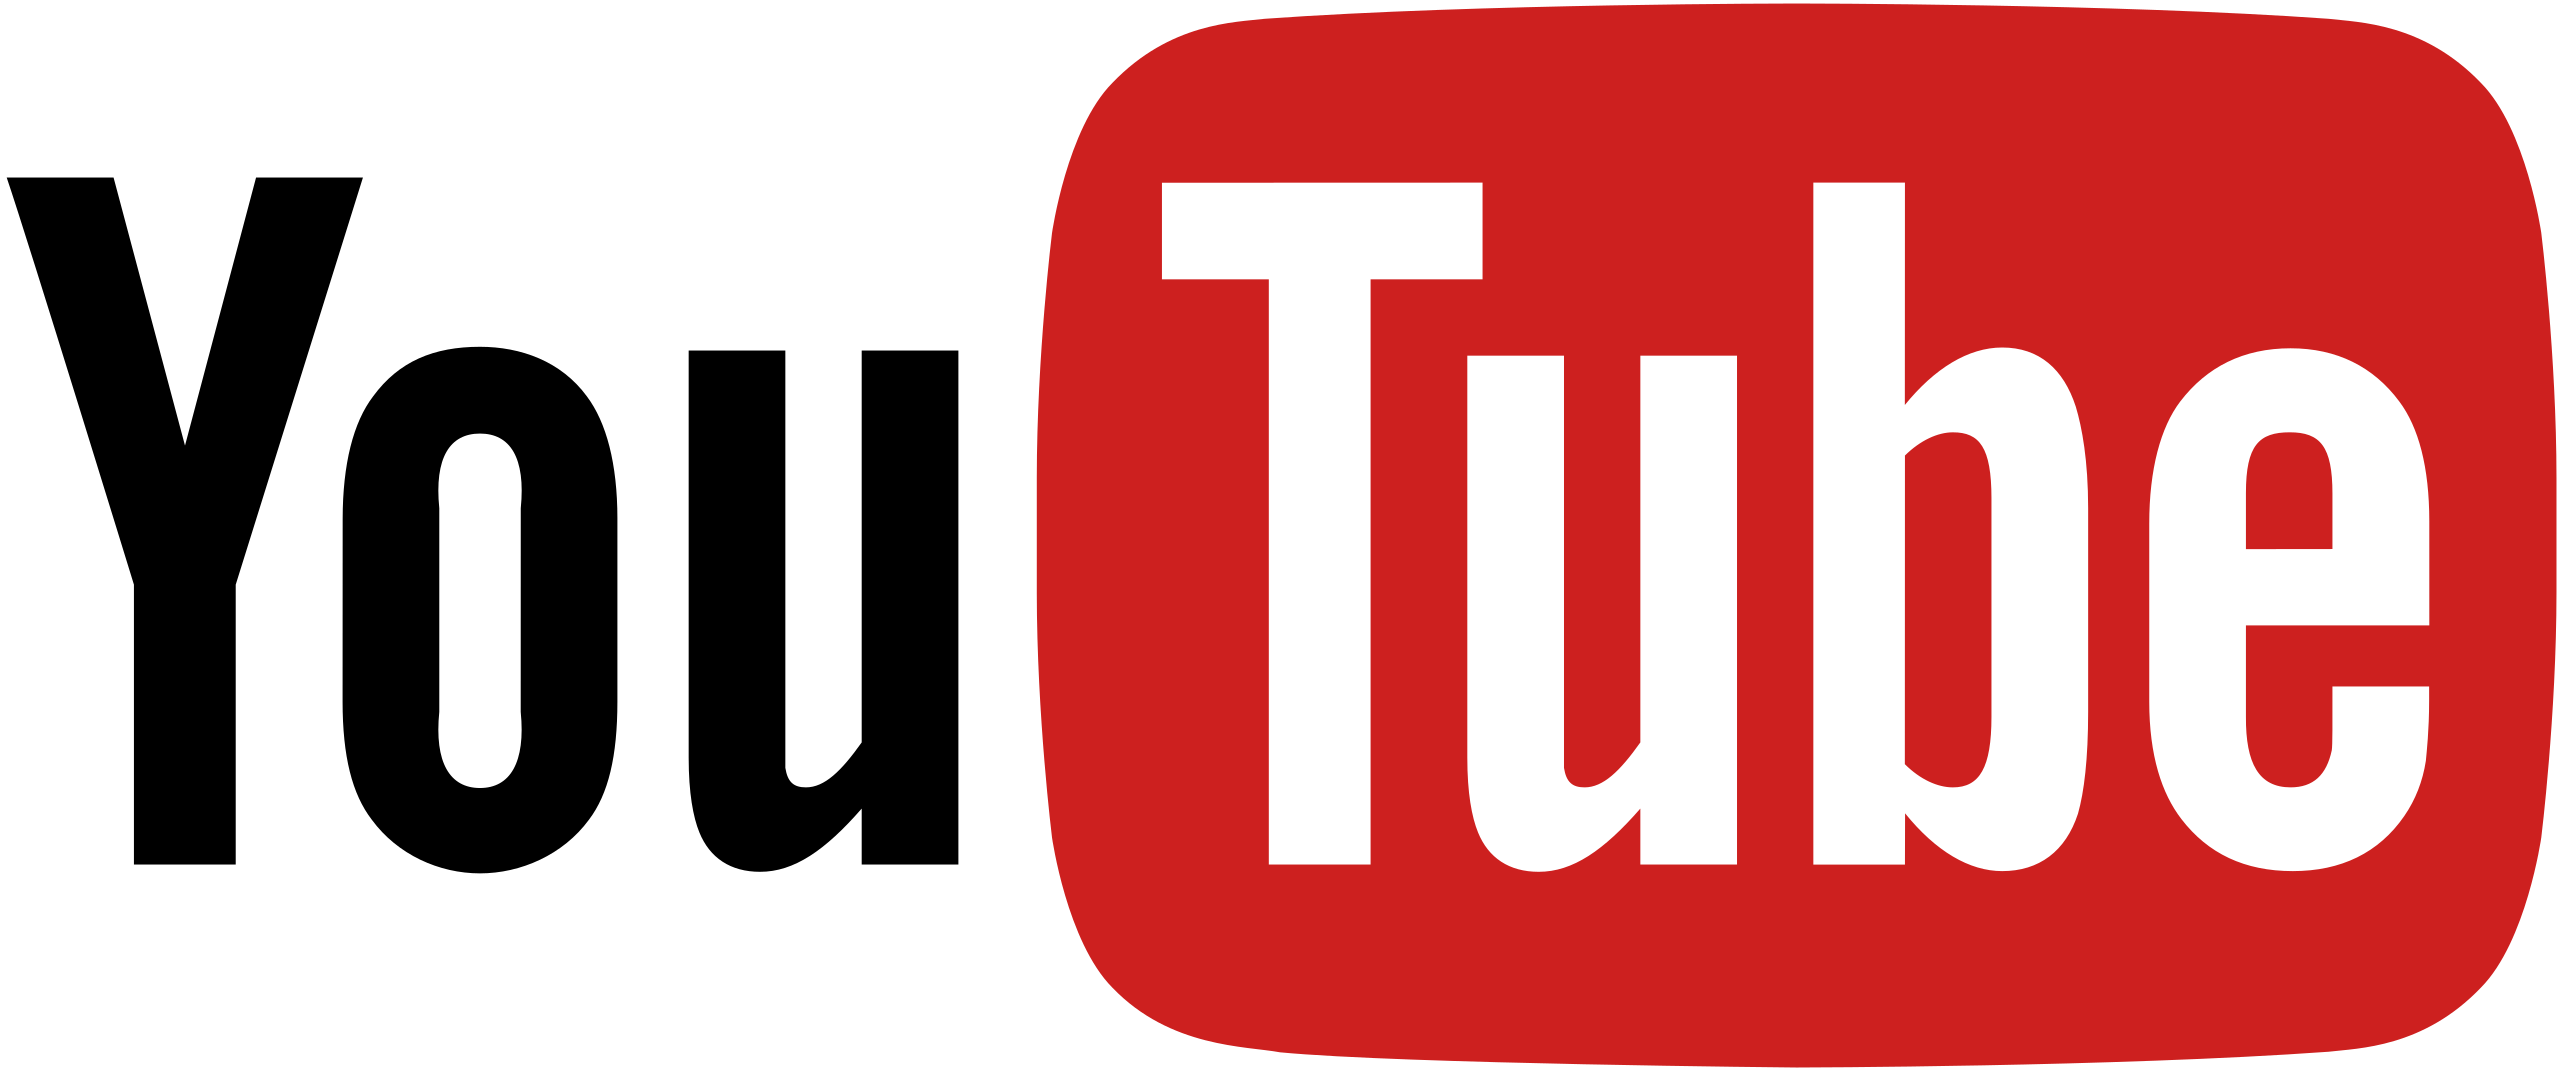 2560px-Logo_of_YouTube_(2015-2017).svg